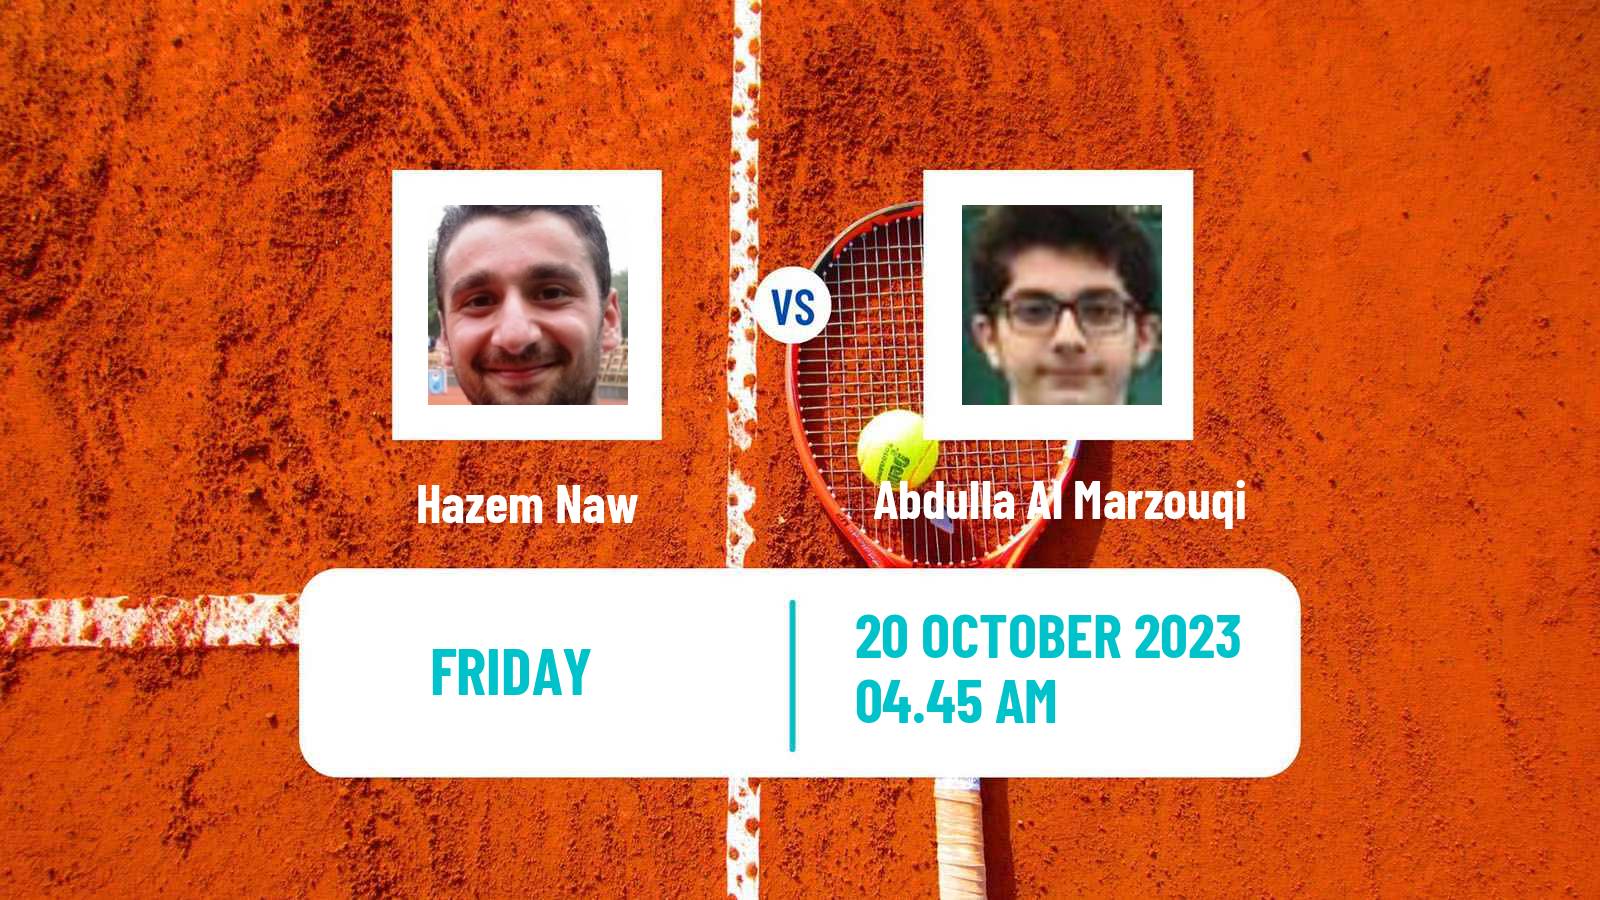 Tennis Davis Cup Group IV Hazem Naw - Abdulla Al Marzouqi